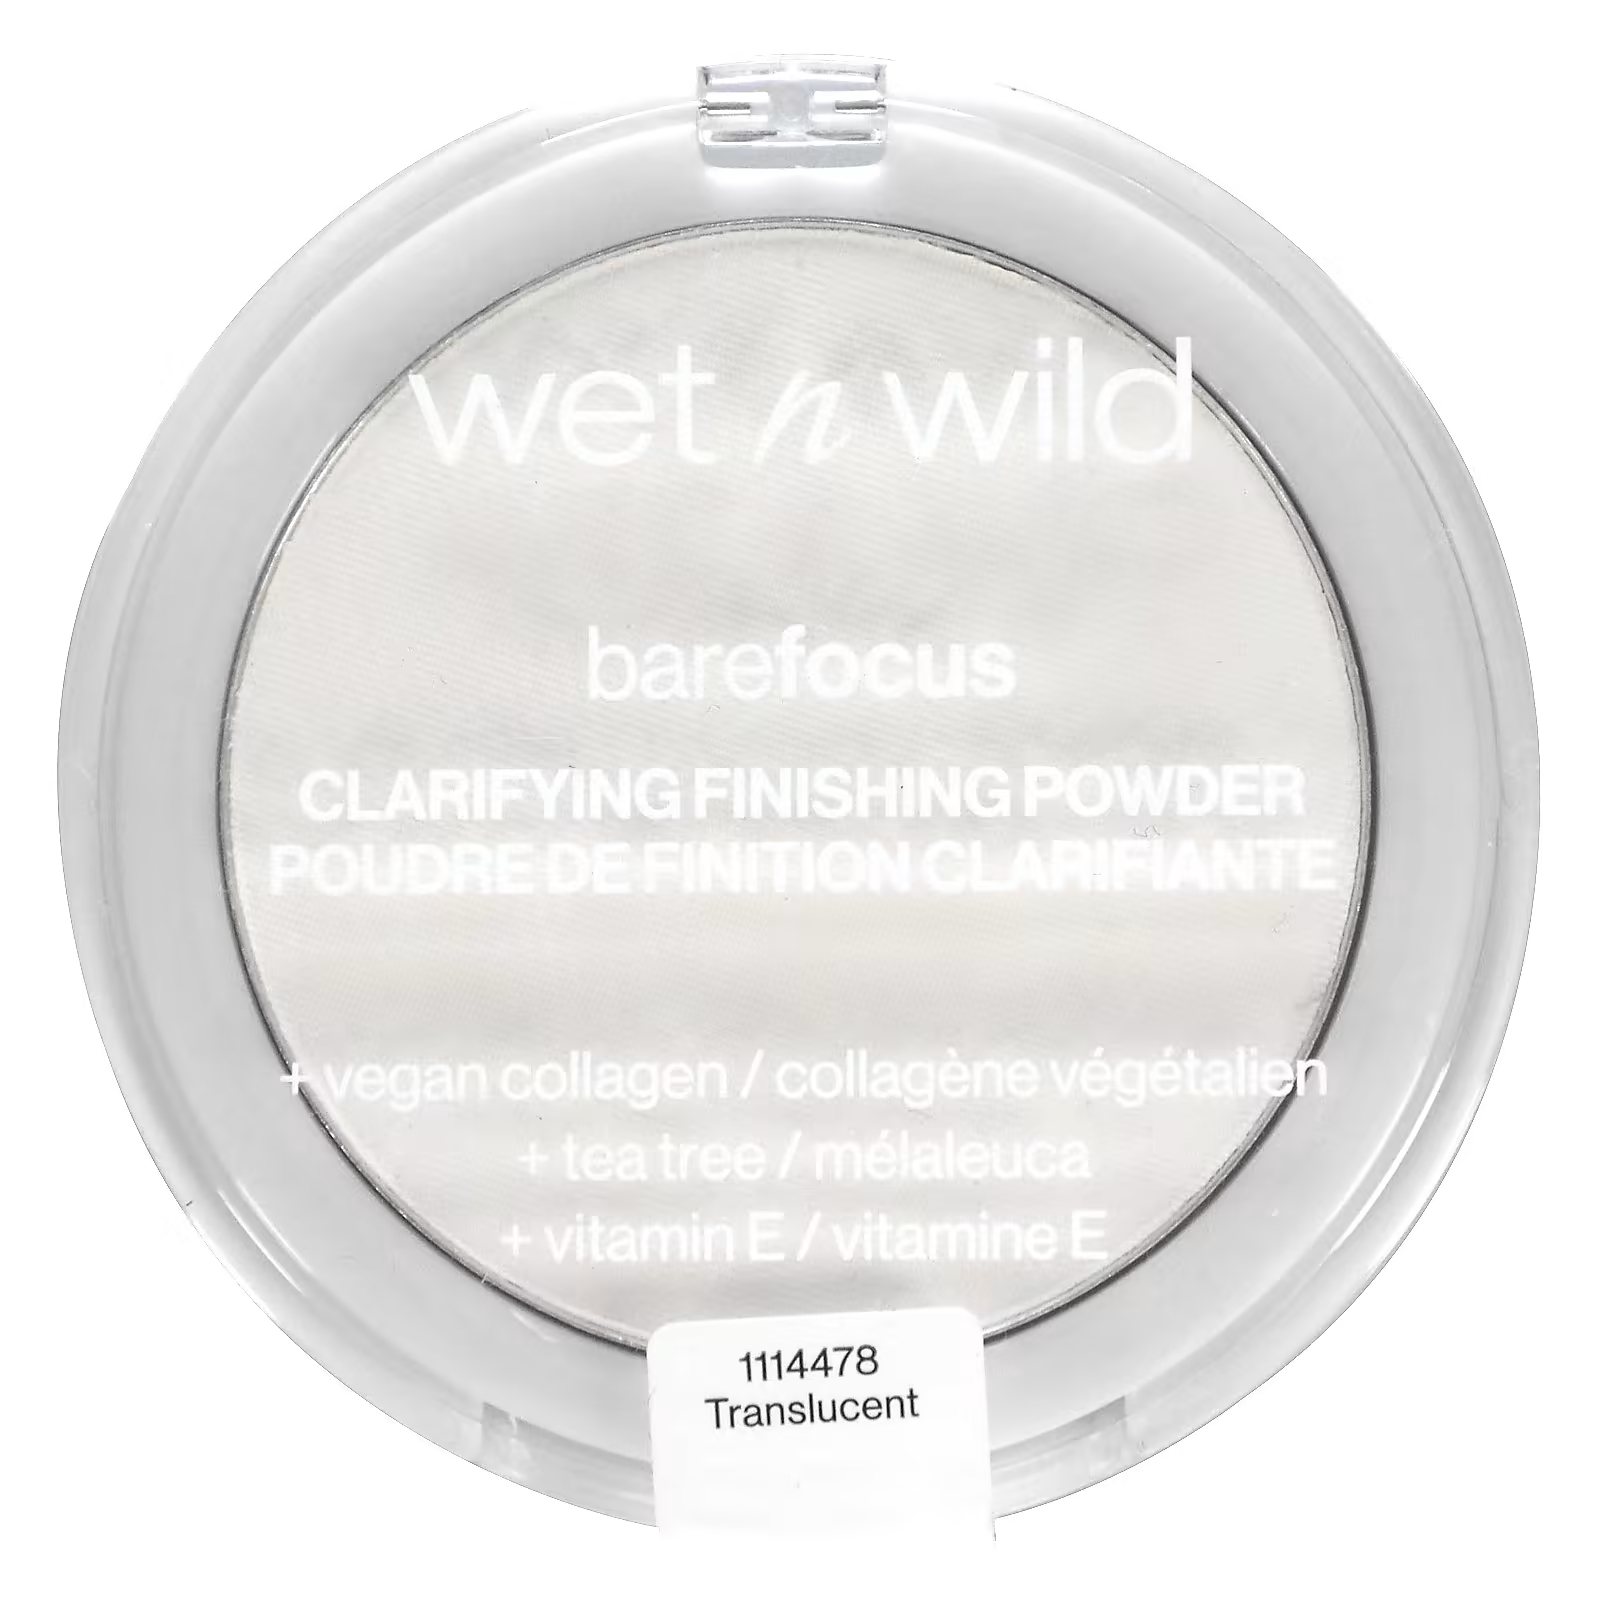 Пудра для лица Wet n Wild Barefocus Clarifying Finishing Powder Translucent